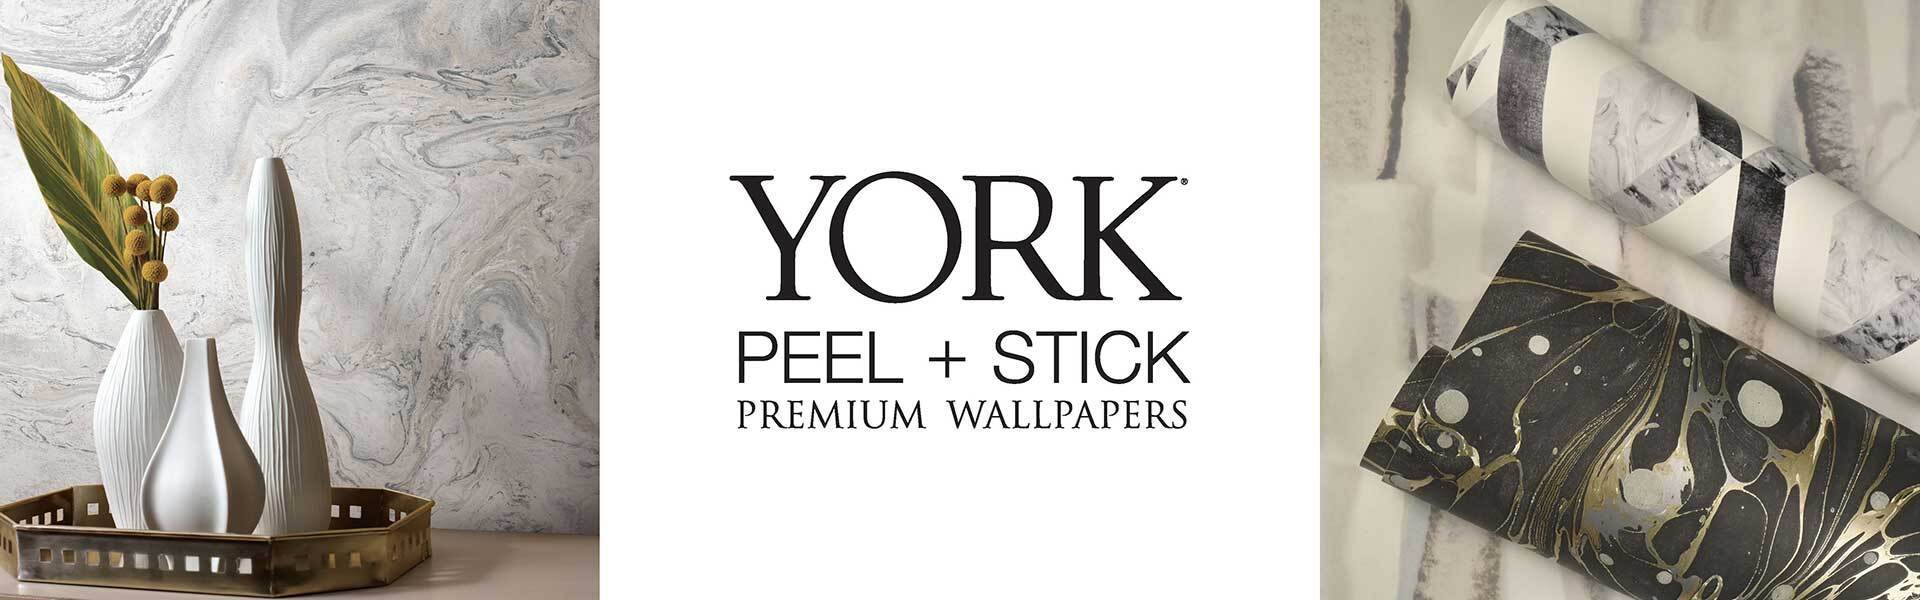 York Premium Peel + Stick